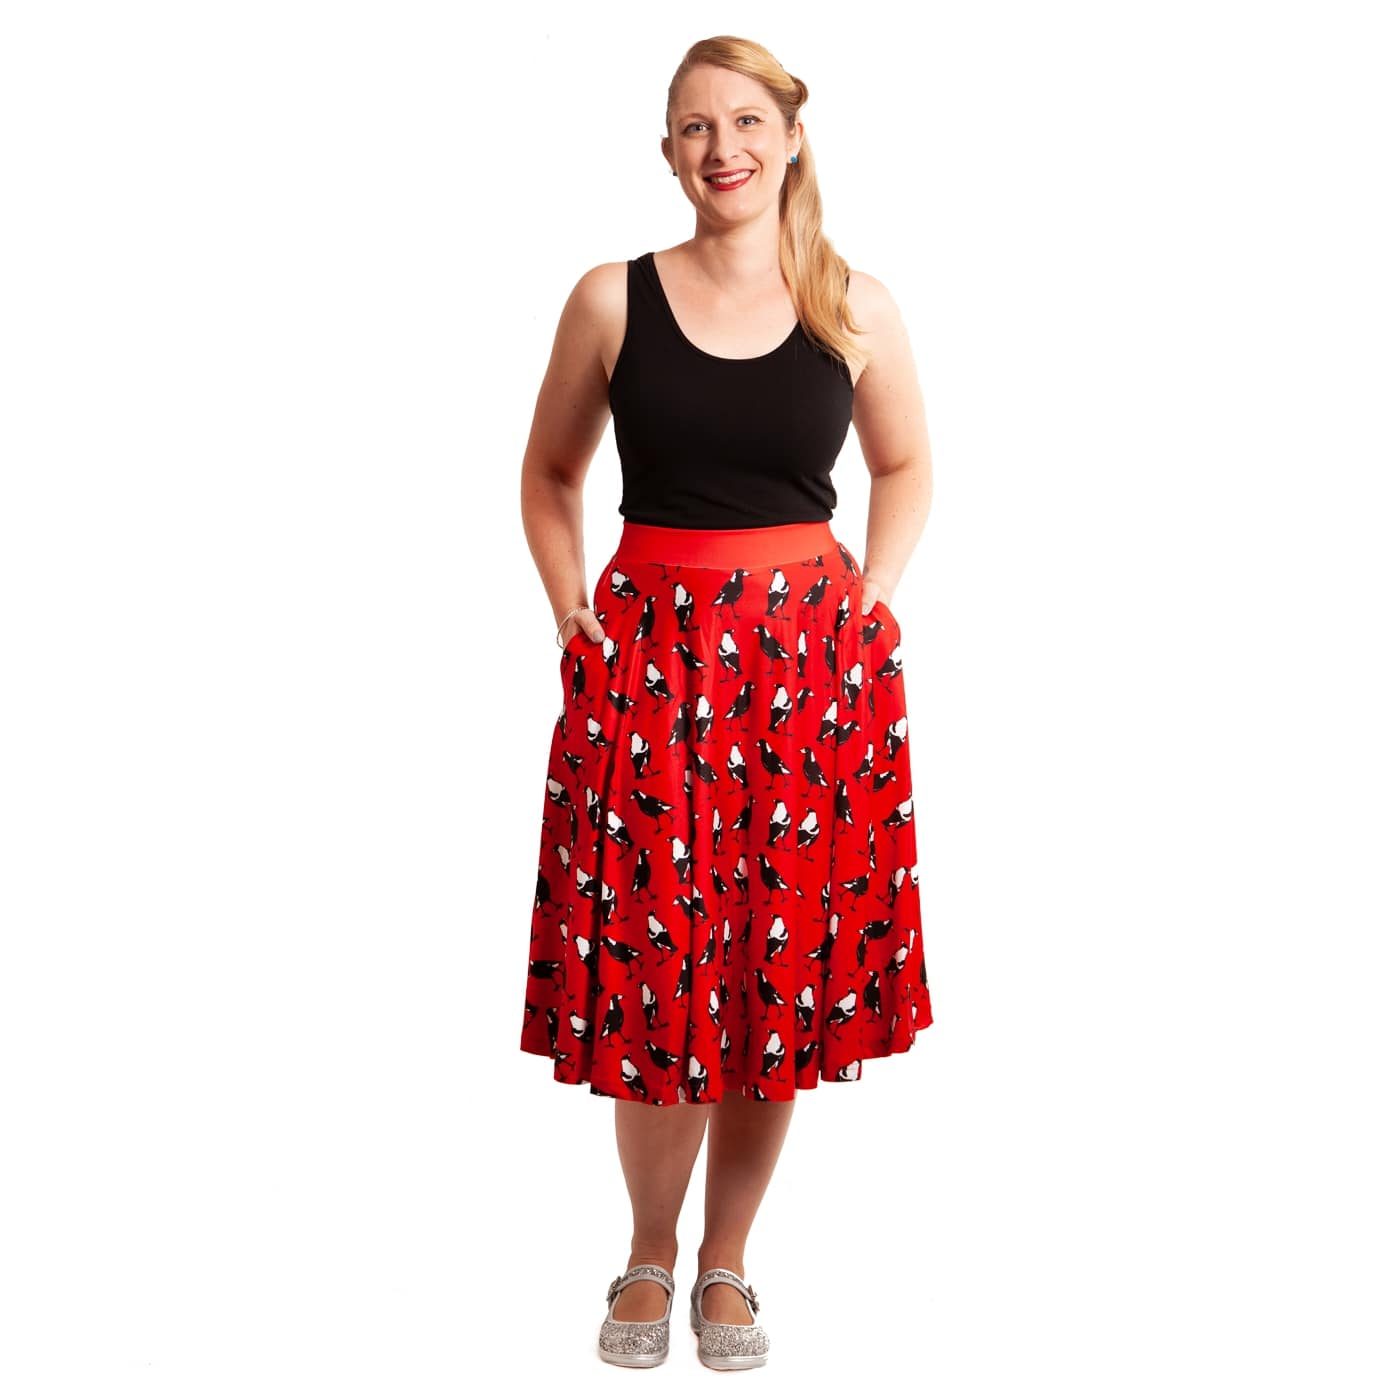 Charm Swishy Skirt by RainbowsAndFairies.com.au (Magpie - Red Black & White - Animal Print - Australian Bird - Circle Skirt With Pockets - Mod Retro) - SKU: CL_SWISH_CHARM_ORG - Pic-05